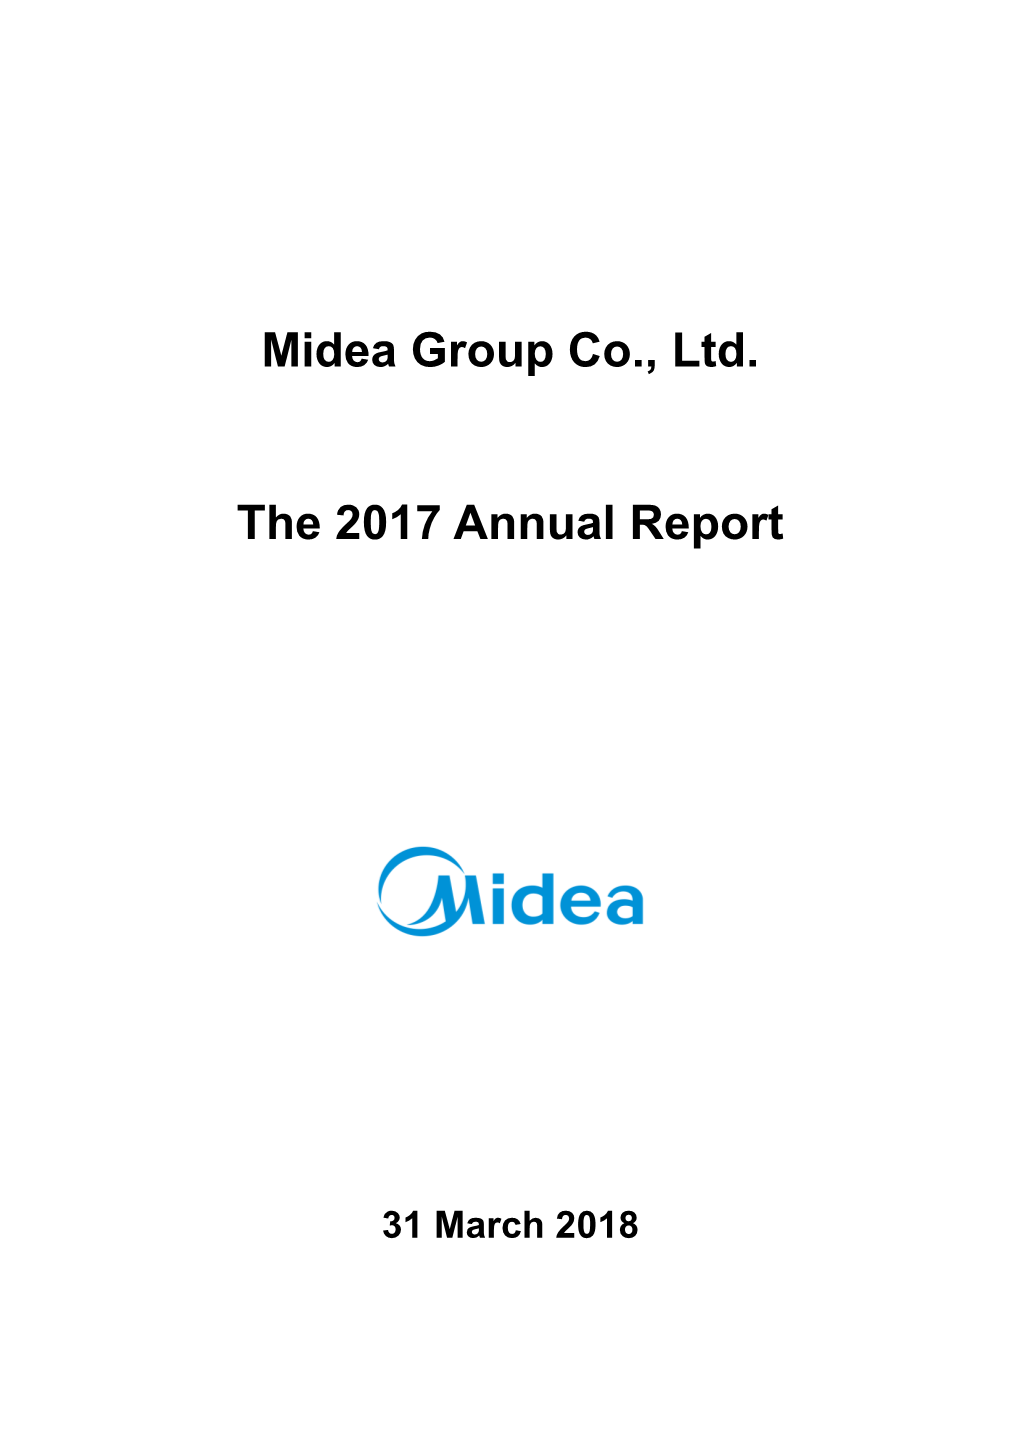 Midea Group Co., Ltd. the 2017 Annual Report